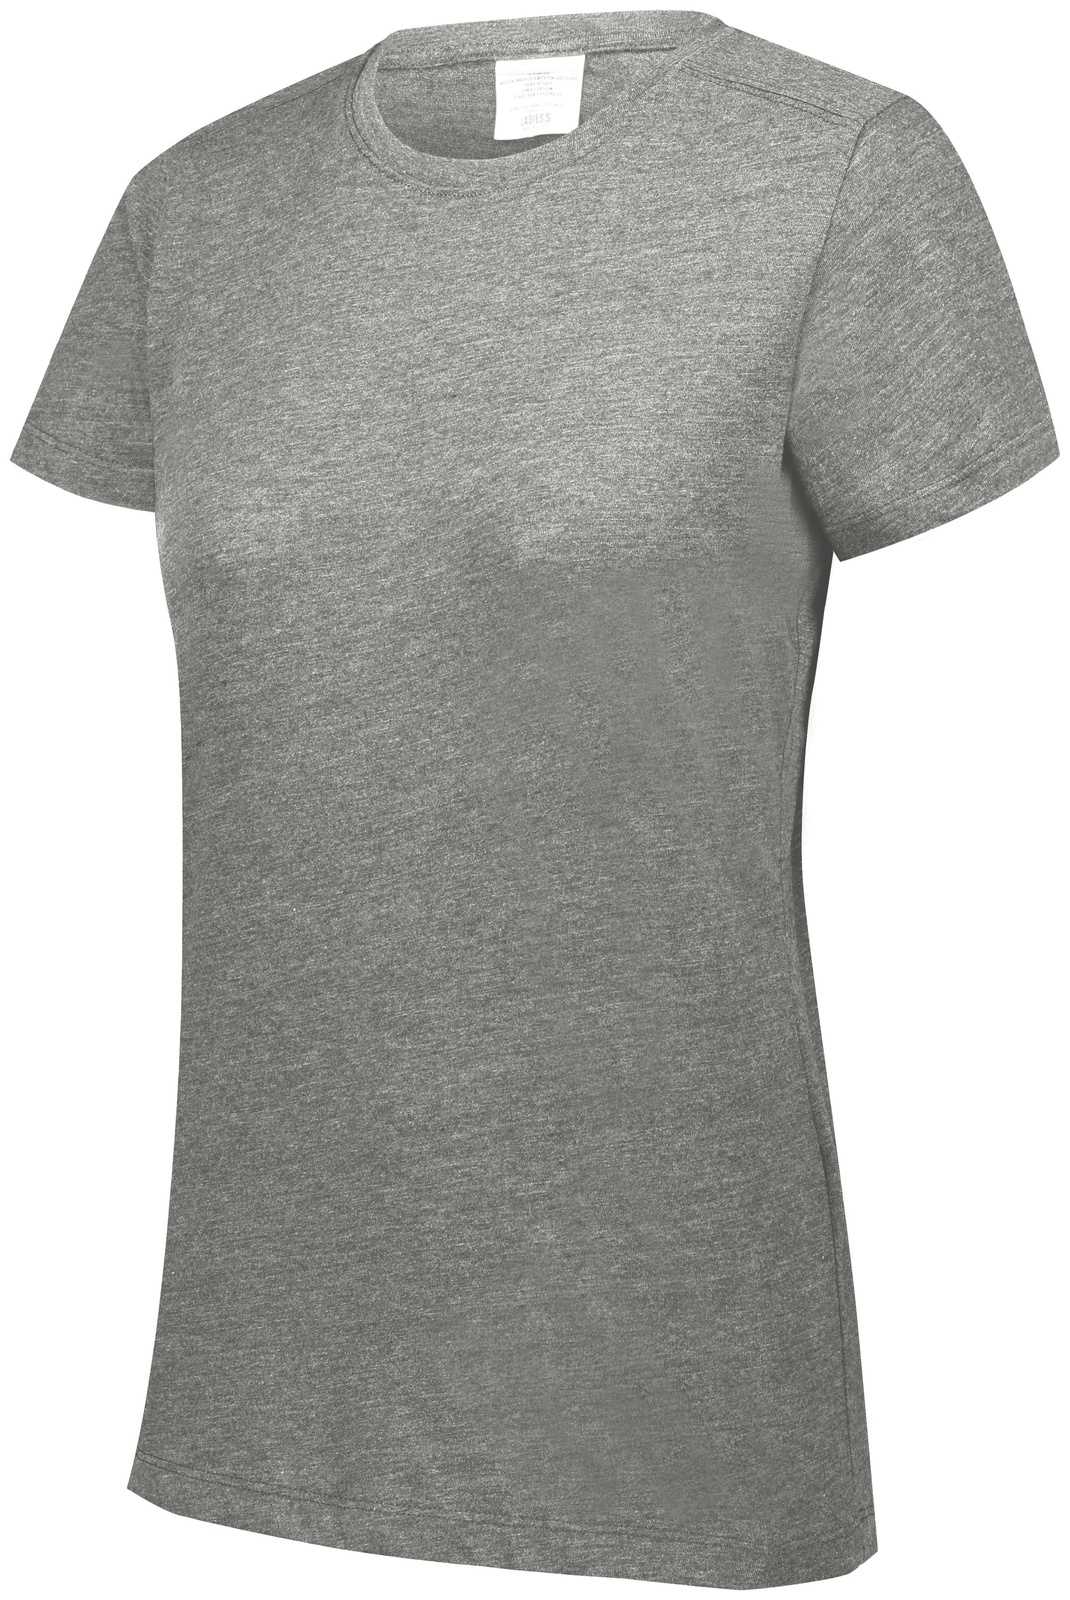 Augusta 3067 Ladies Tri-Blend T-Shirt - Grey Heather - HIT a Double